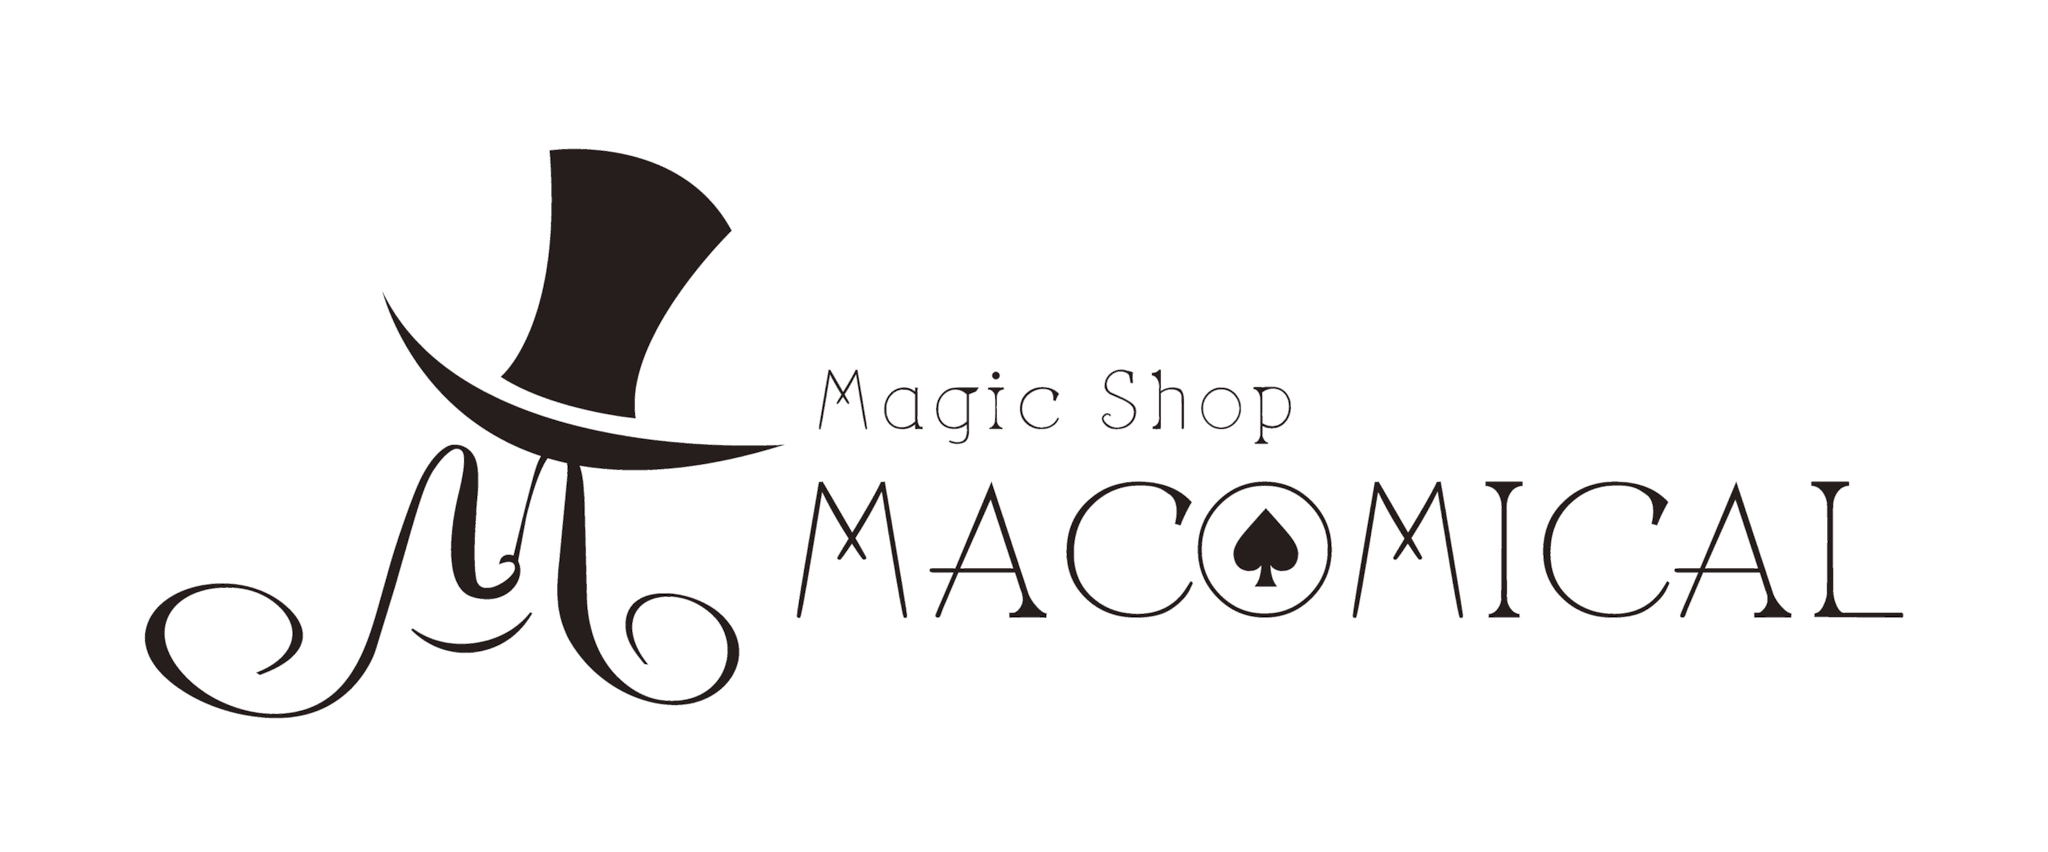 Macomical Shop